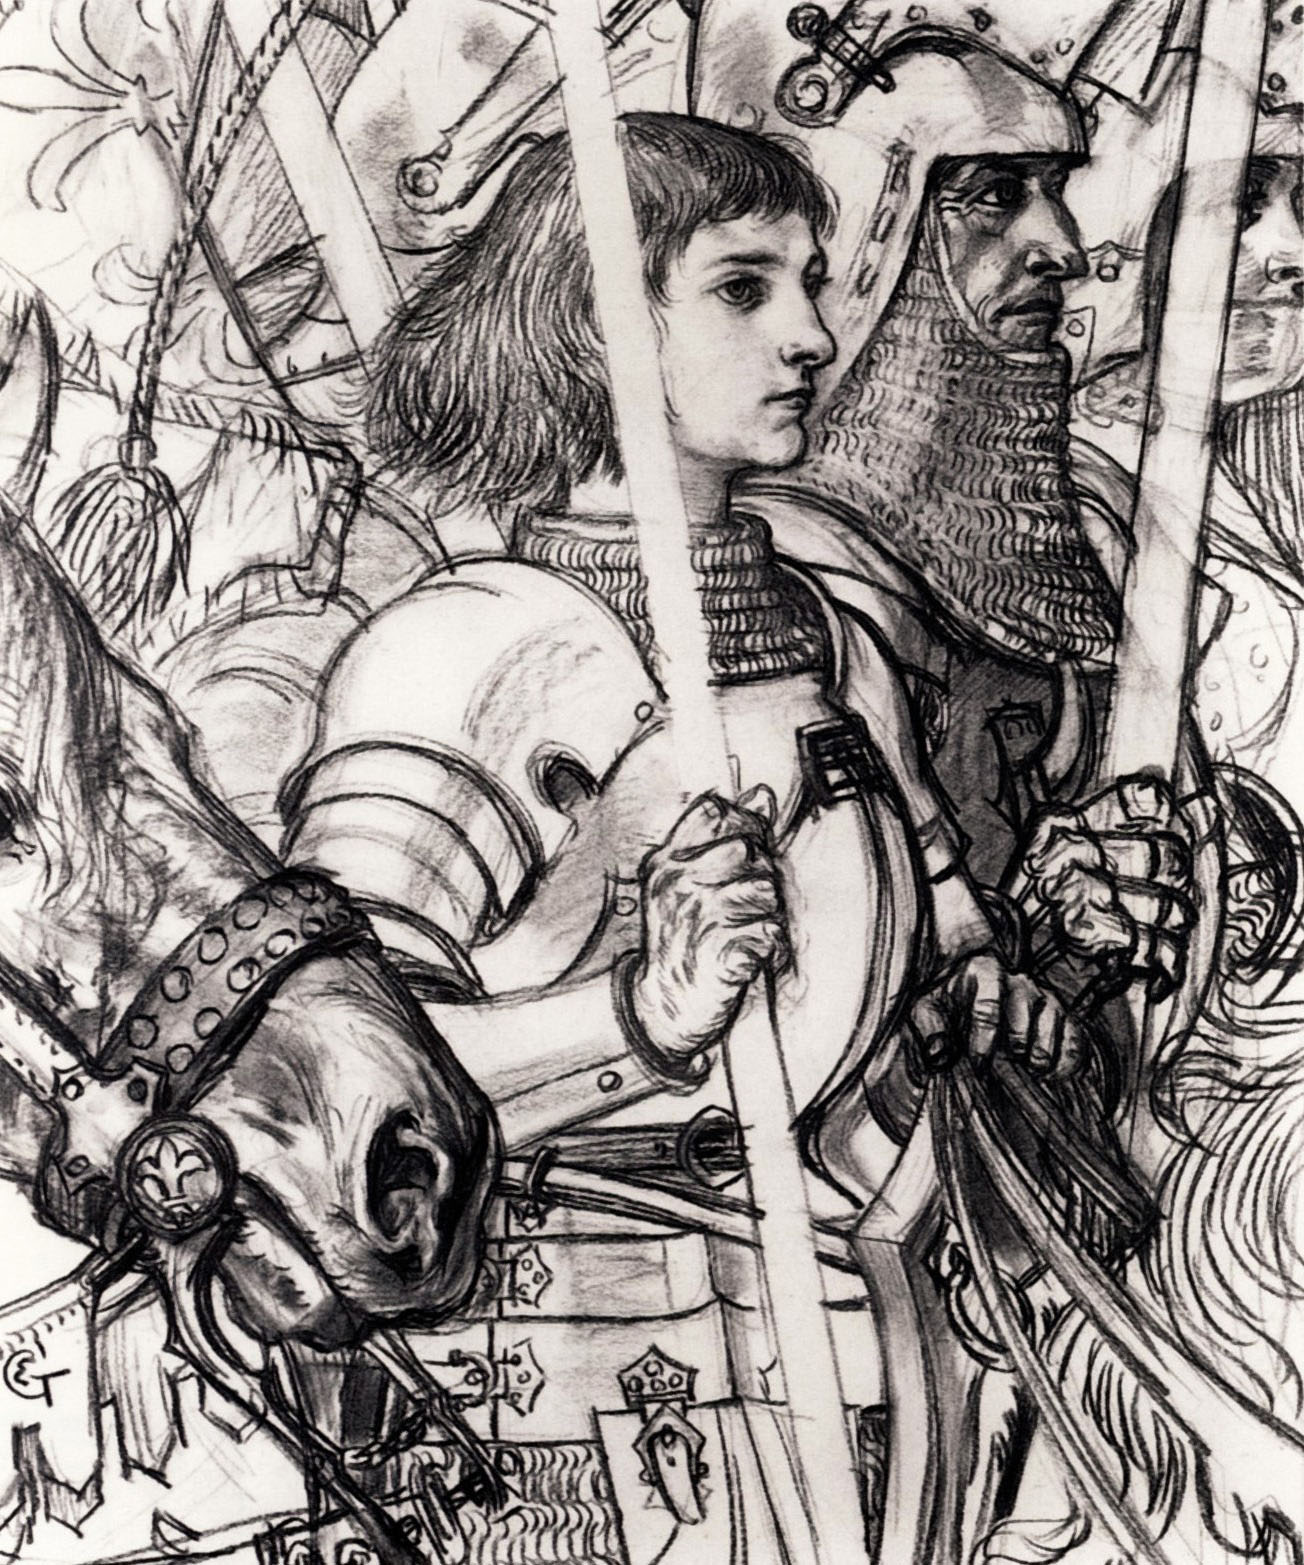 Эжен Грассе. "Жанна д'Арк". Дизайн плаката книги Марка Твена. 1895. Музей декоративного искусства, Париж.